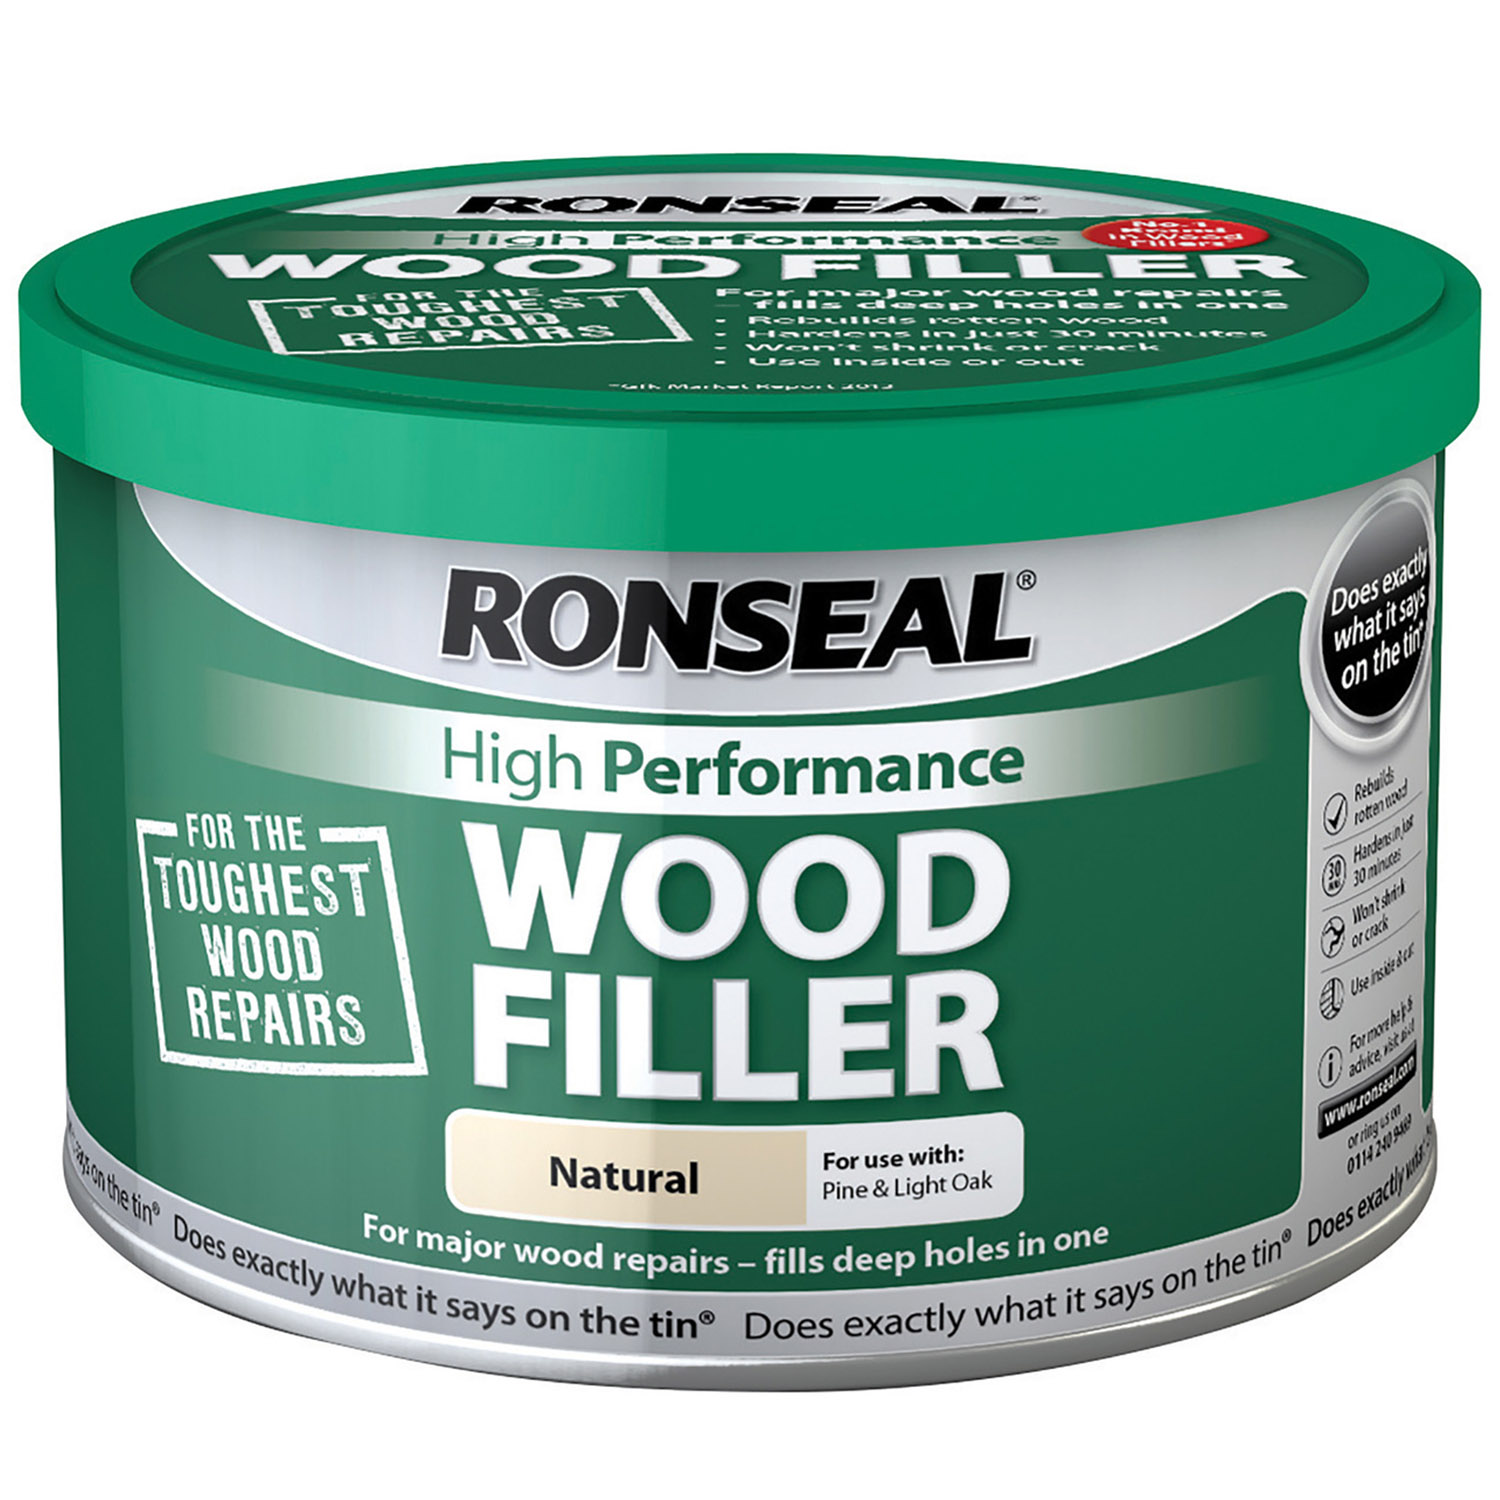 Ronseal High Performance Natural Wood Filler 275g Image